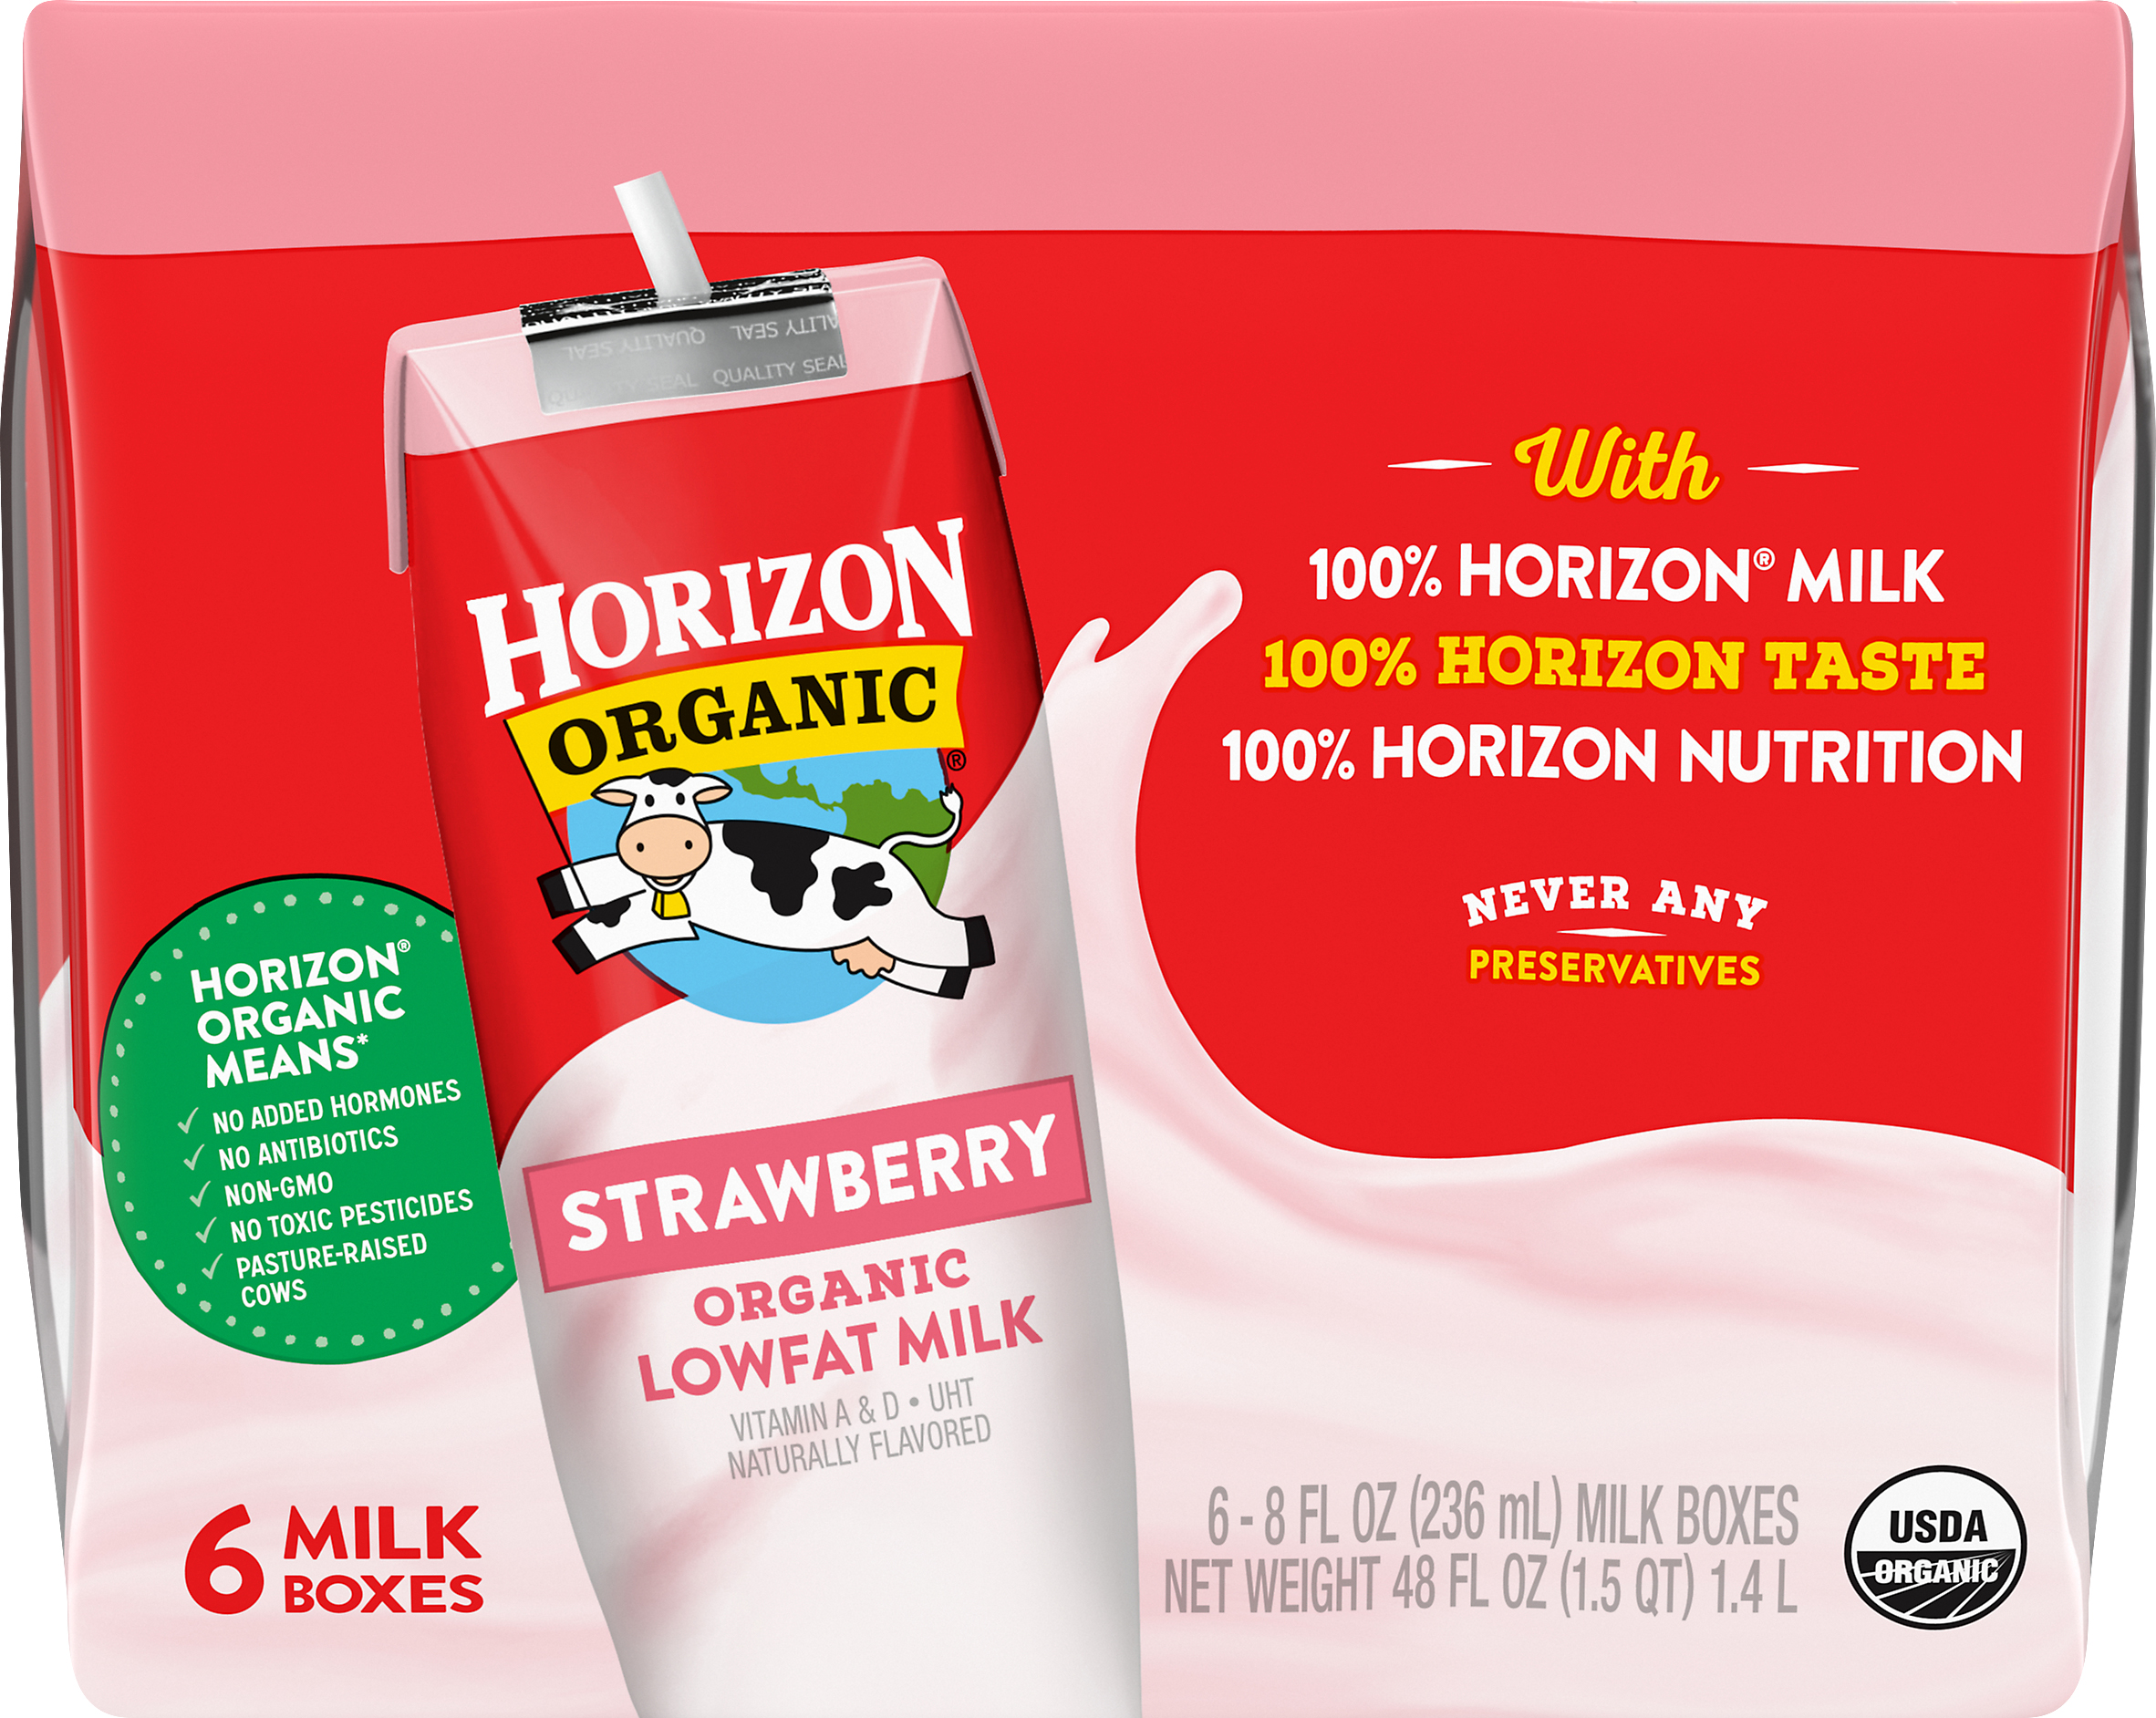 Horizon Organic 1% Lowfat Strawberry Milk 3 innerpacks per case 48.0 fl